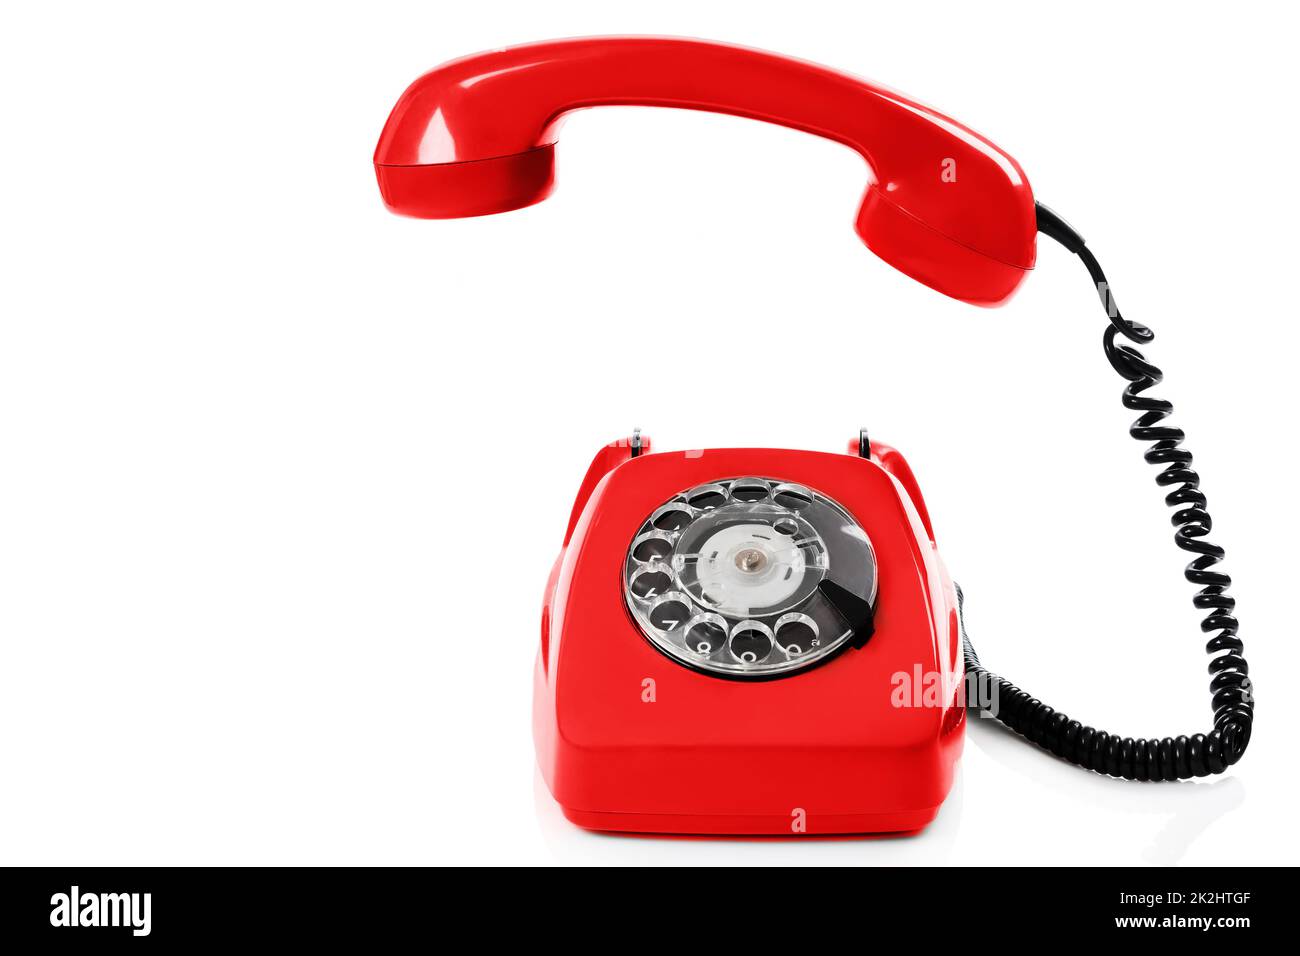 Retro red telephone on white background Stock Photo